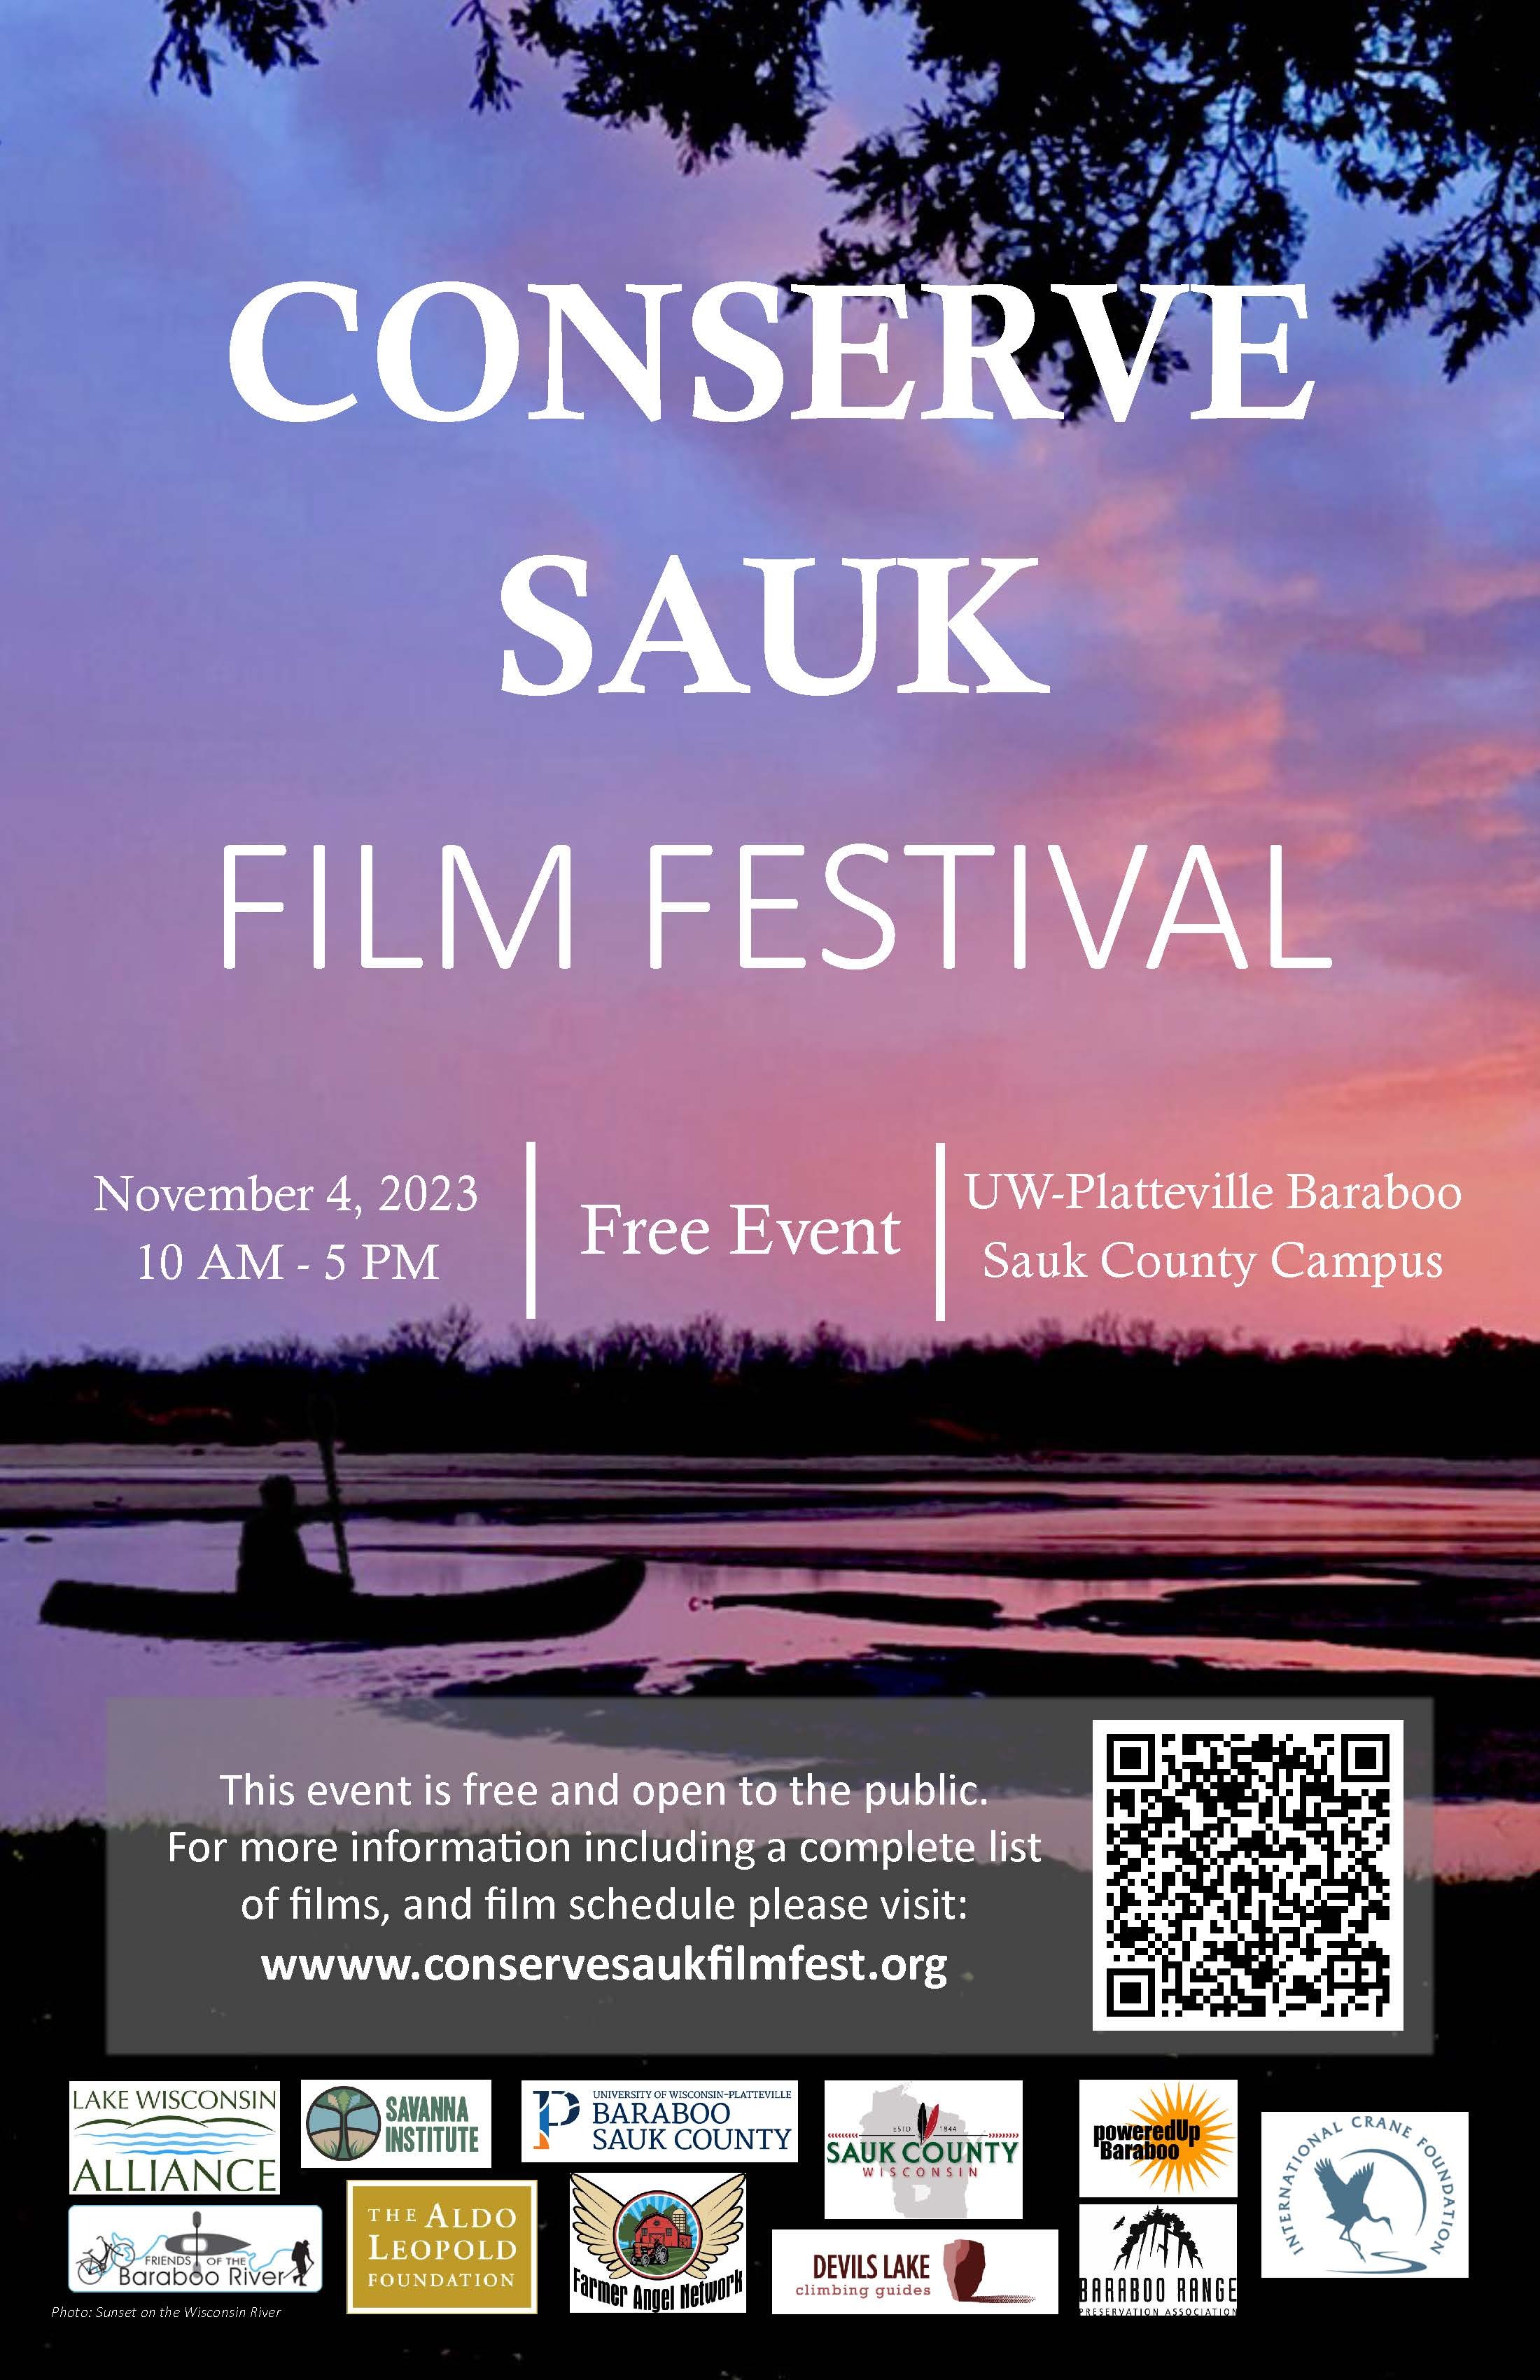 Conserve_Sauk_Film_Festival_2023